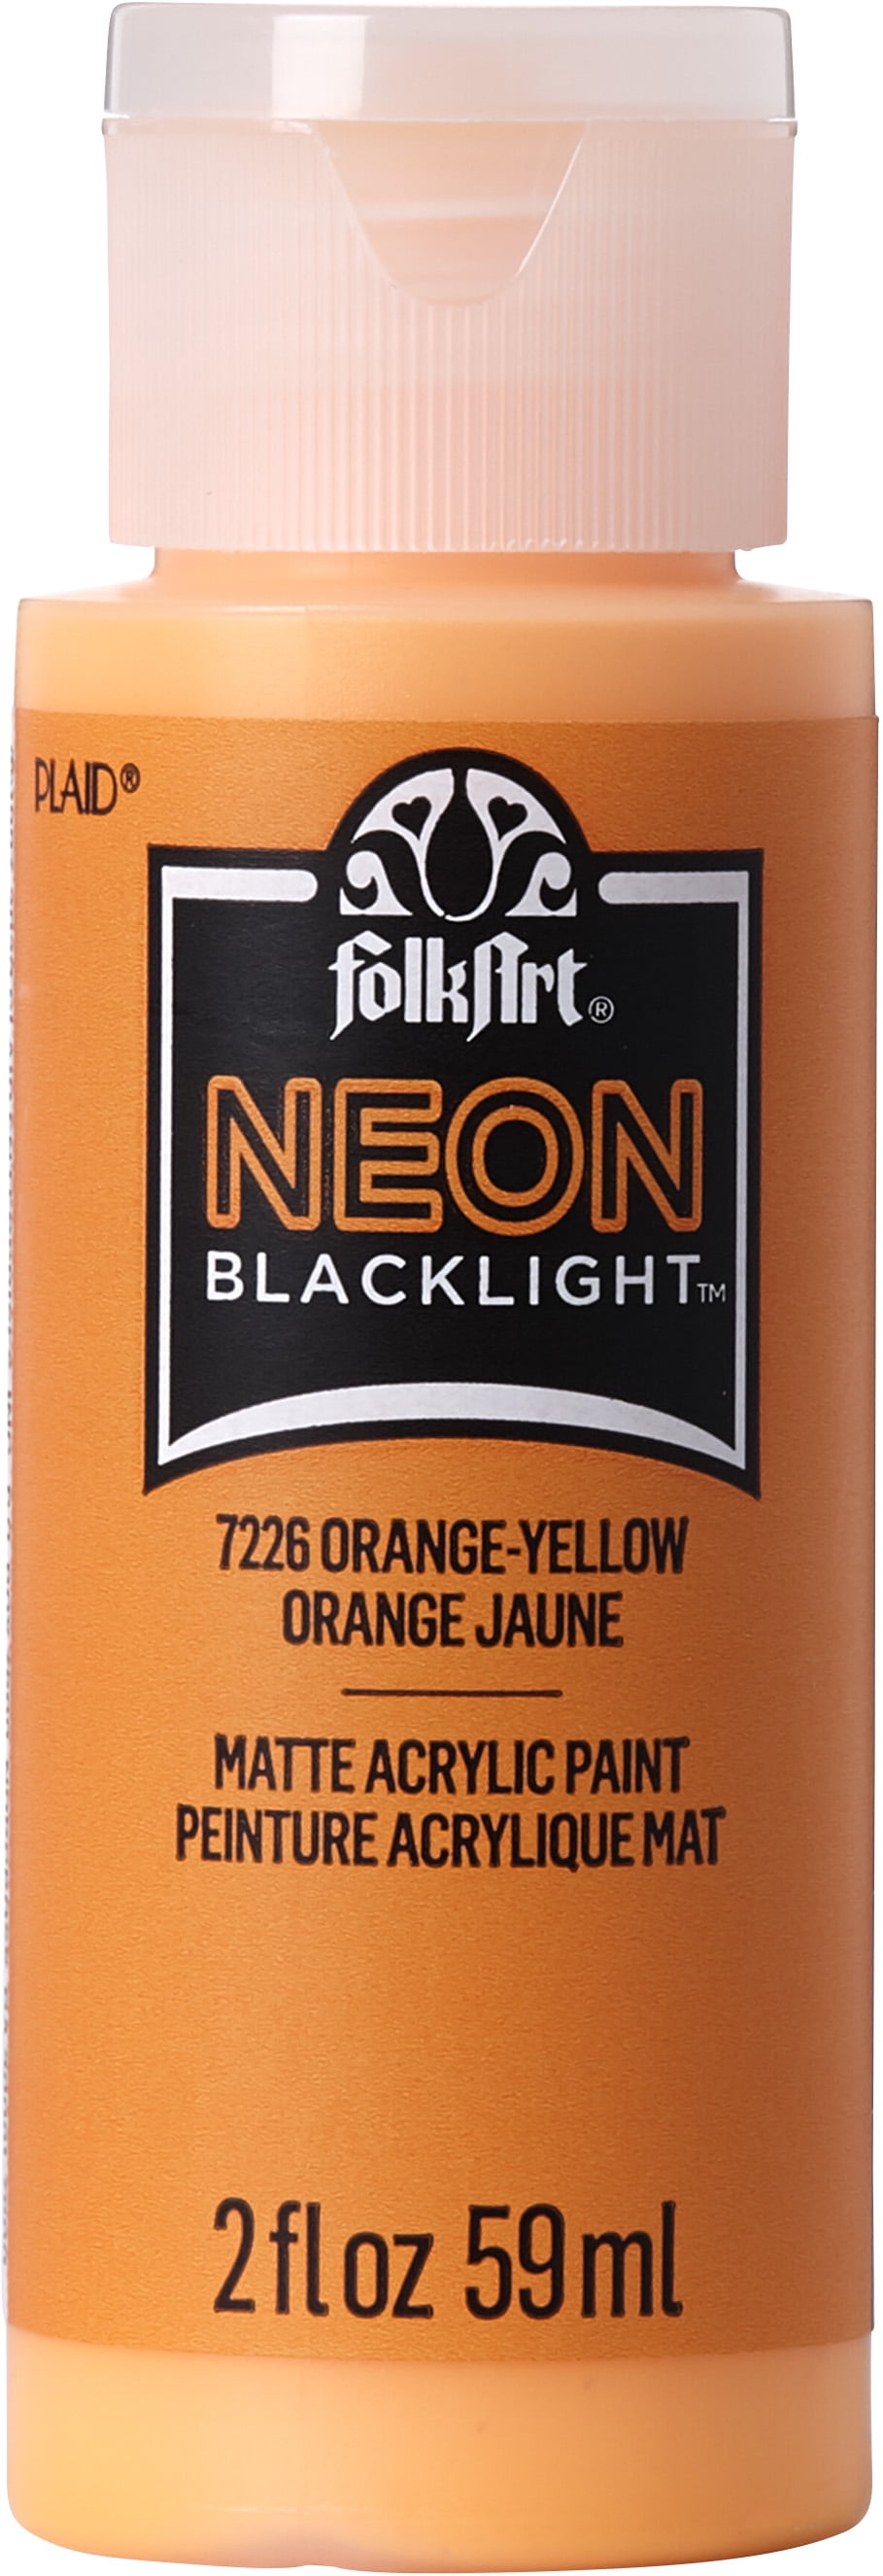 FolkArt Neon Blacklight Acrylic Craft Paint, Matte Finish, Orange-Yellow, 2 fl oz